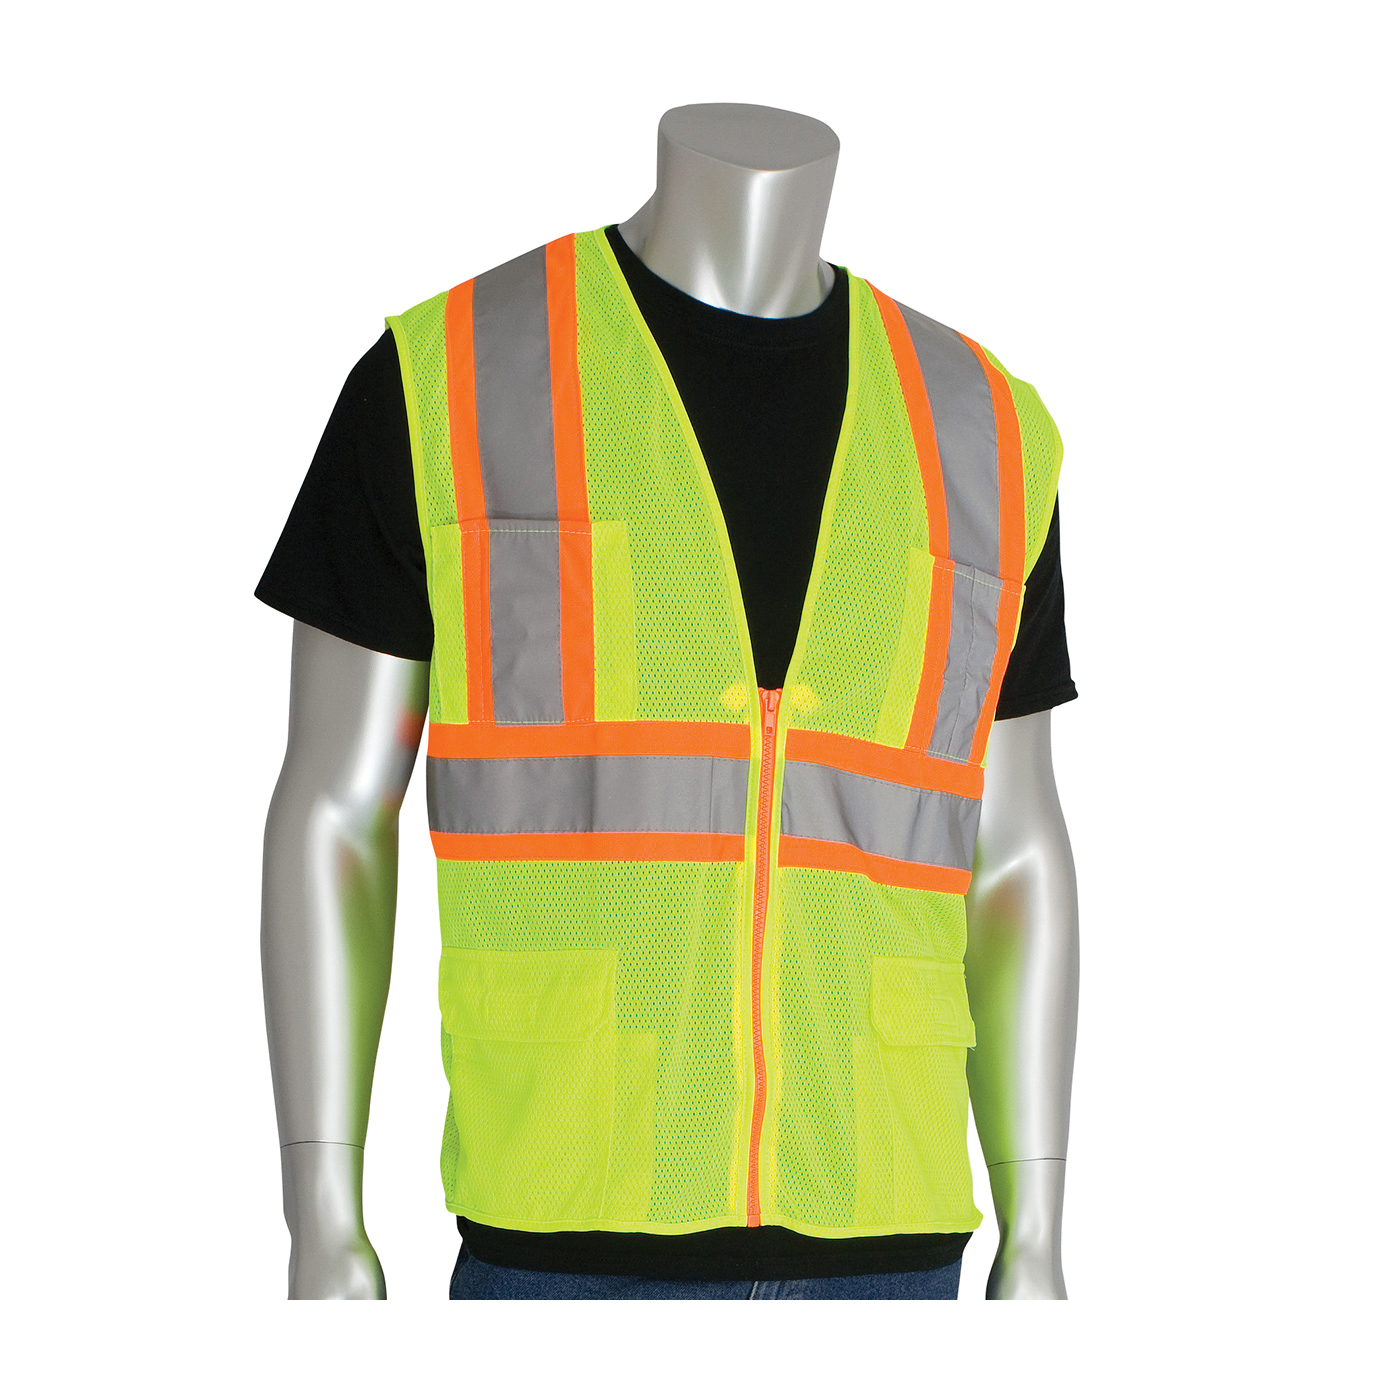 PIP® 302-MAPMLY-4X 2-Tone Premium Surveyor Safety Vest, 4XL, Hi-Viz Lime Yellow, Polyester, Zipper Closure, 11 Pockets, ANSI Class: Class 2, Specifications Met: ANSI 107 Type R